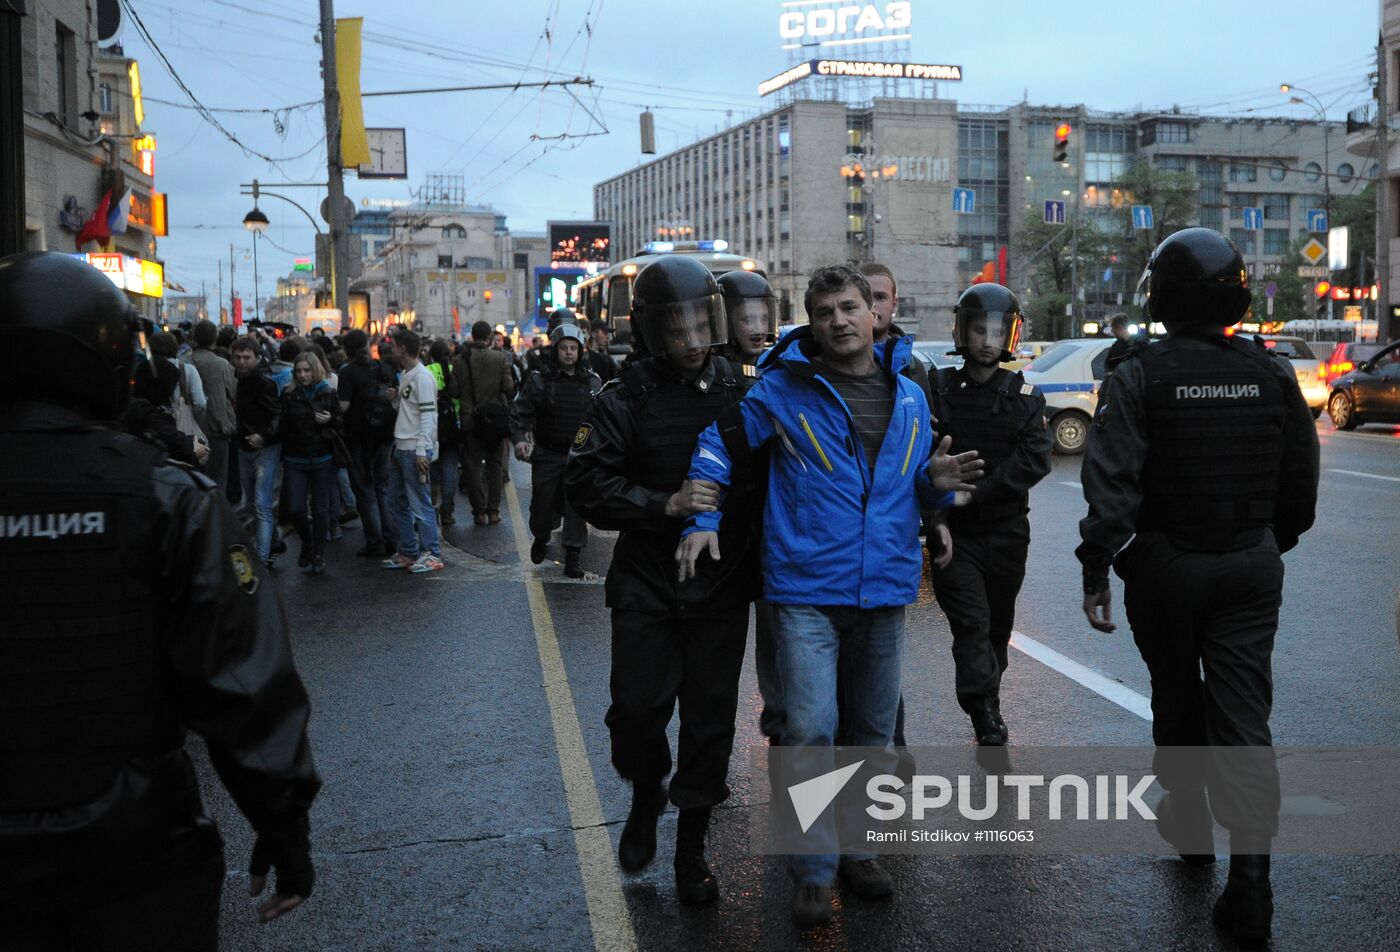 Opposition protest on Pushkinskaya Square